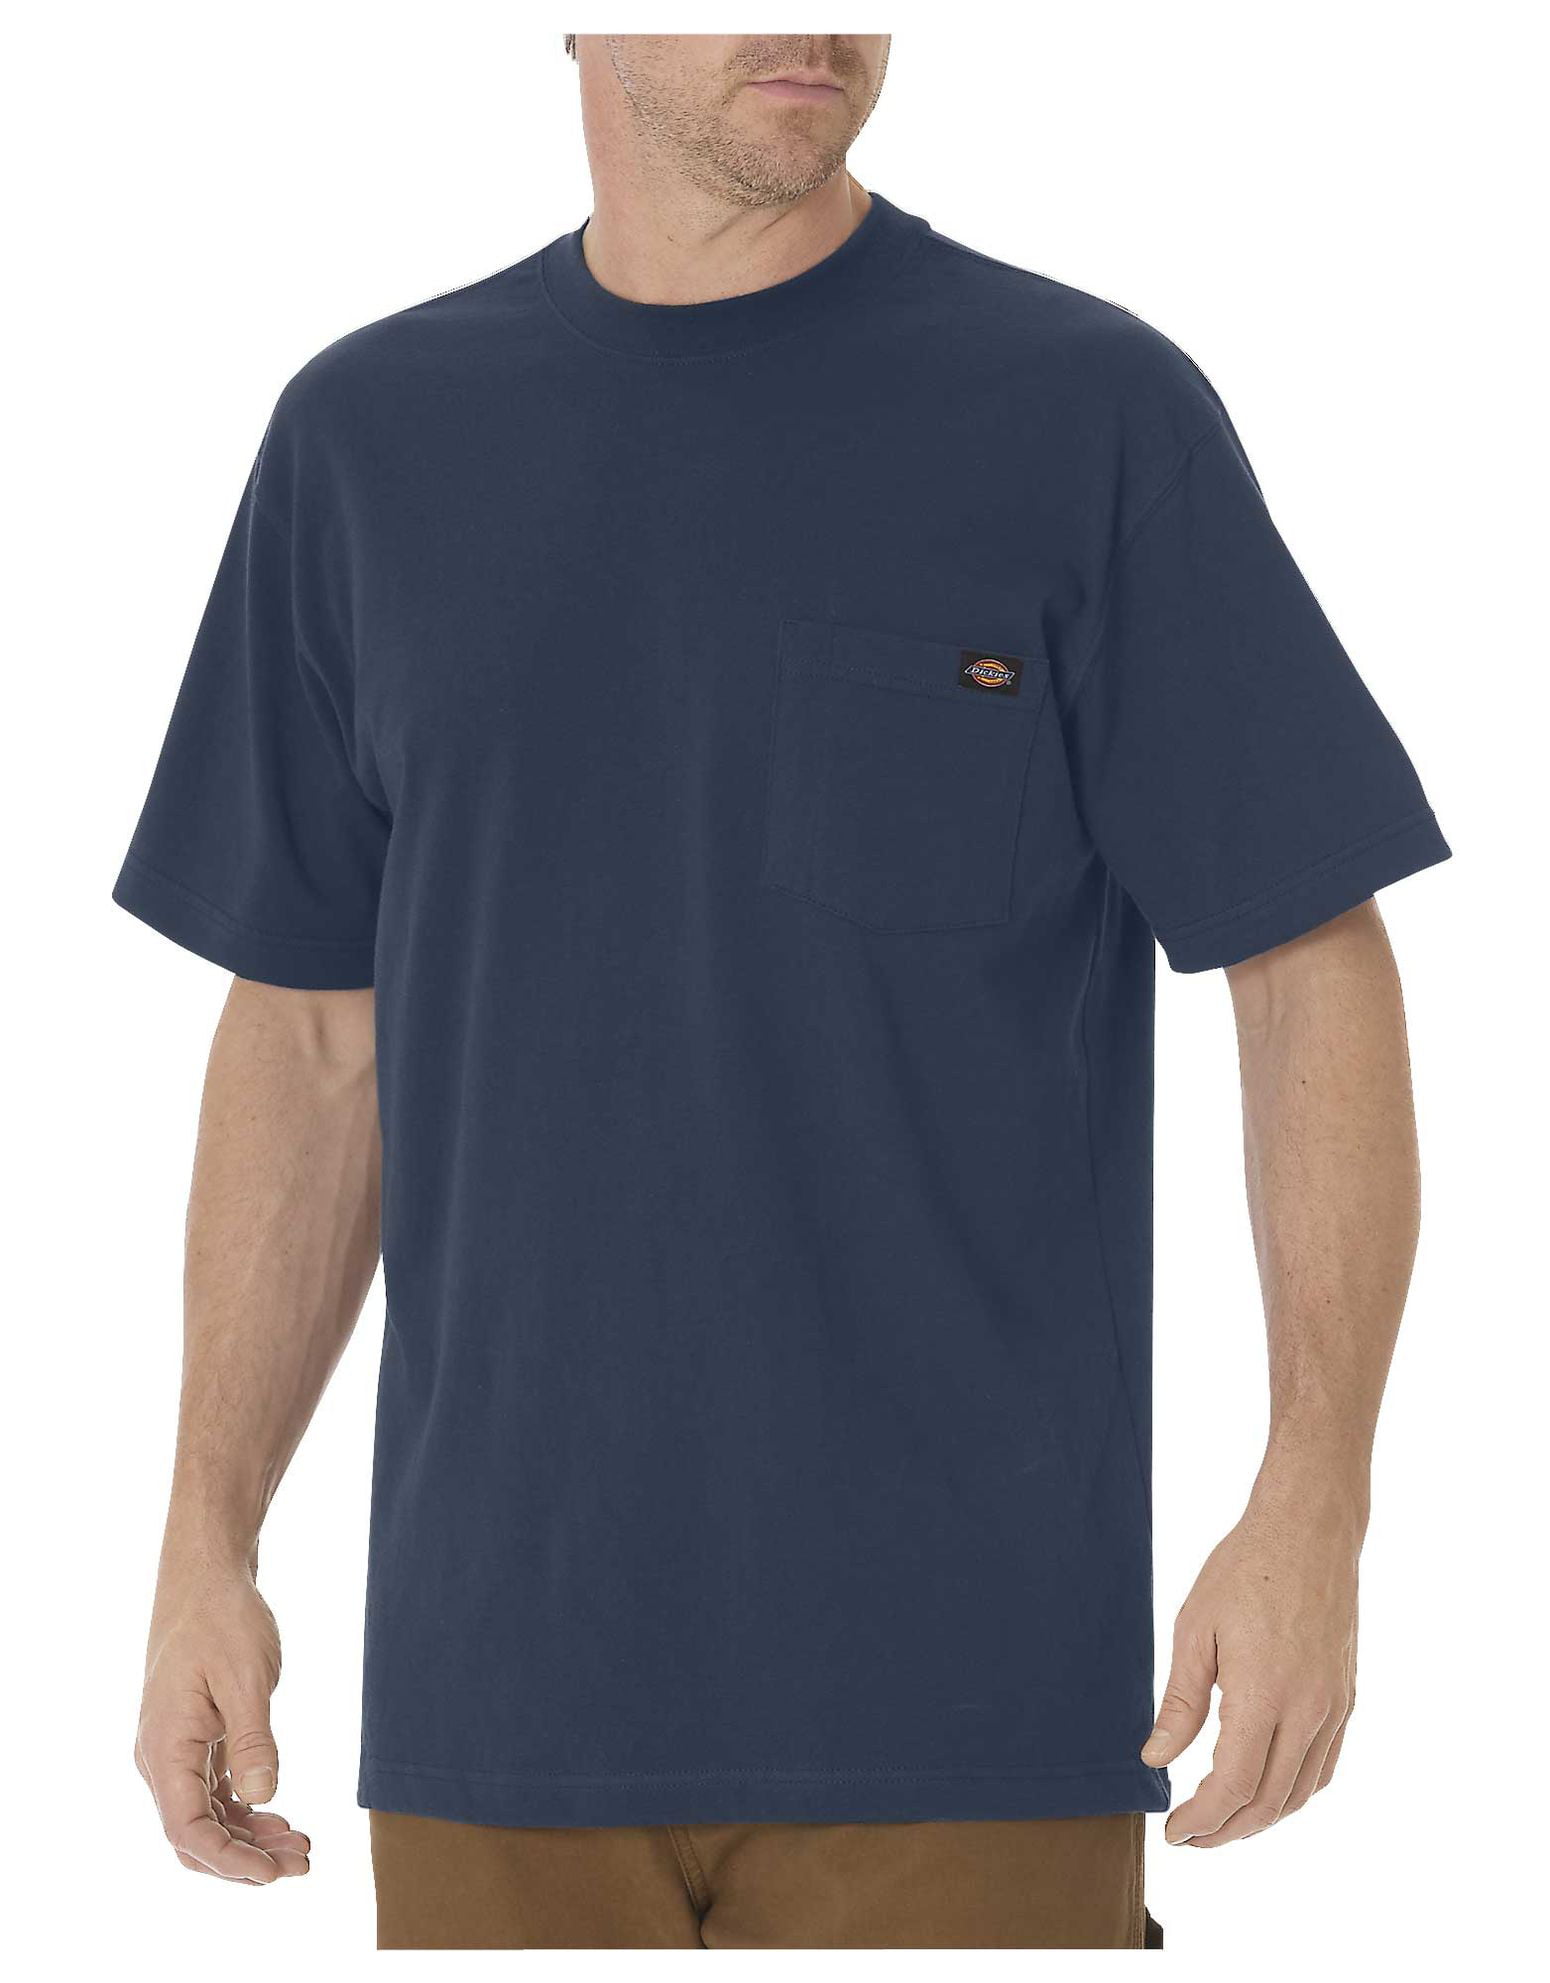 Dickies Mens Short Sleeve Pocket T-Shirt, 3X, Dark Navy | Walmart Canada